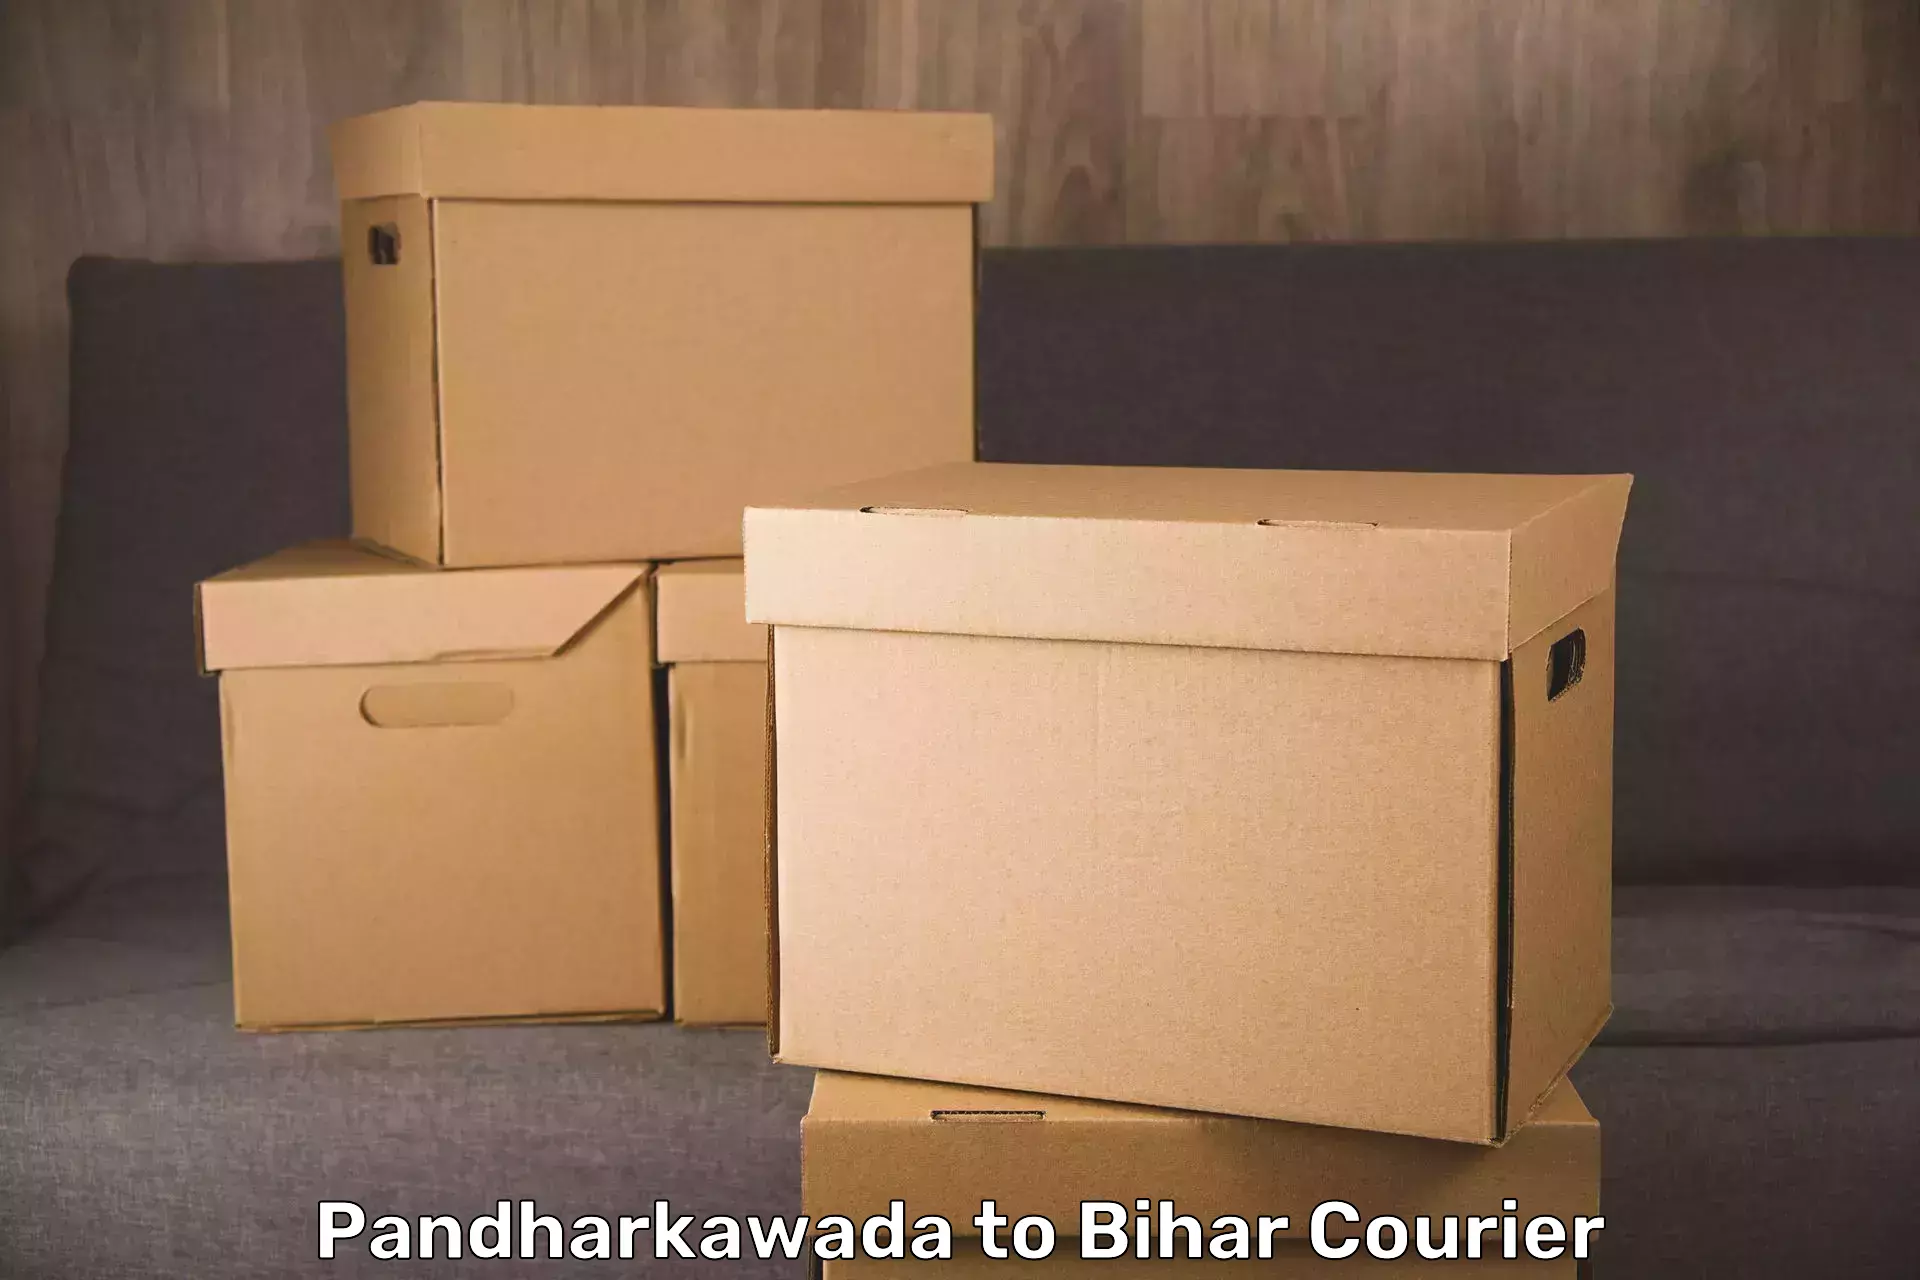 Reliable baggage delivery in Pandharkawada to Aurangabad Bihar